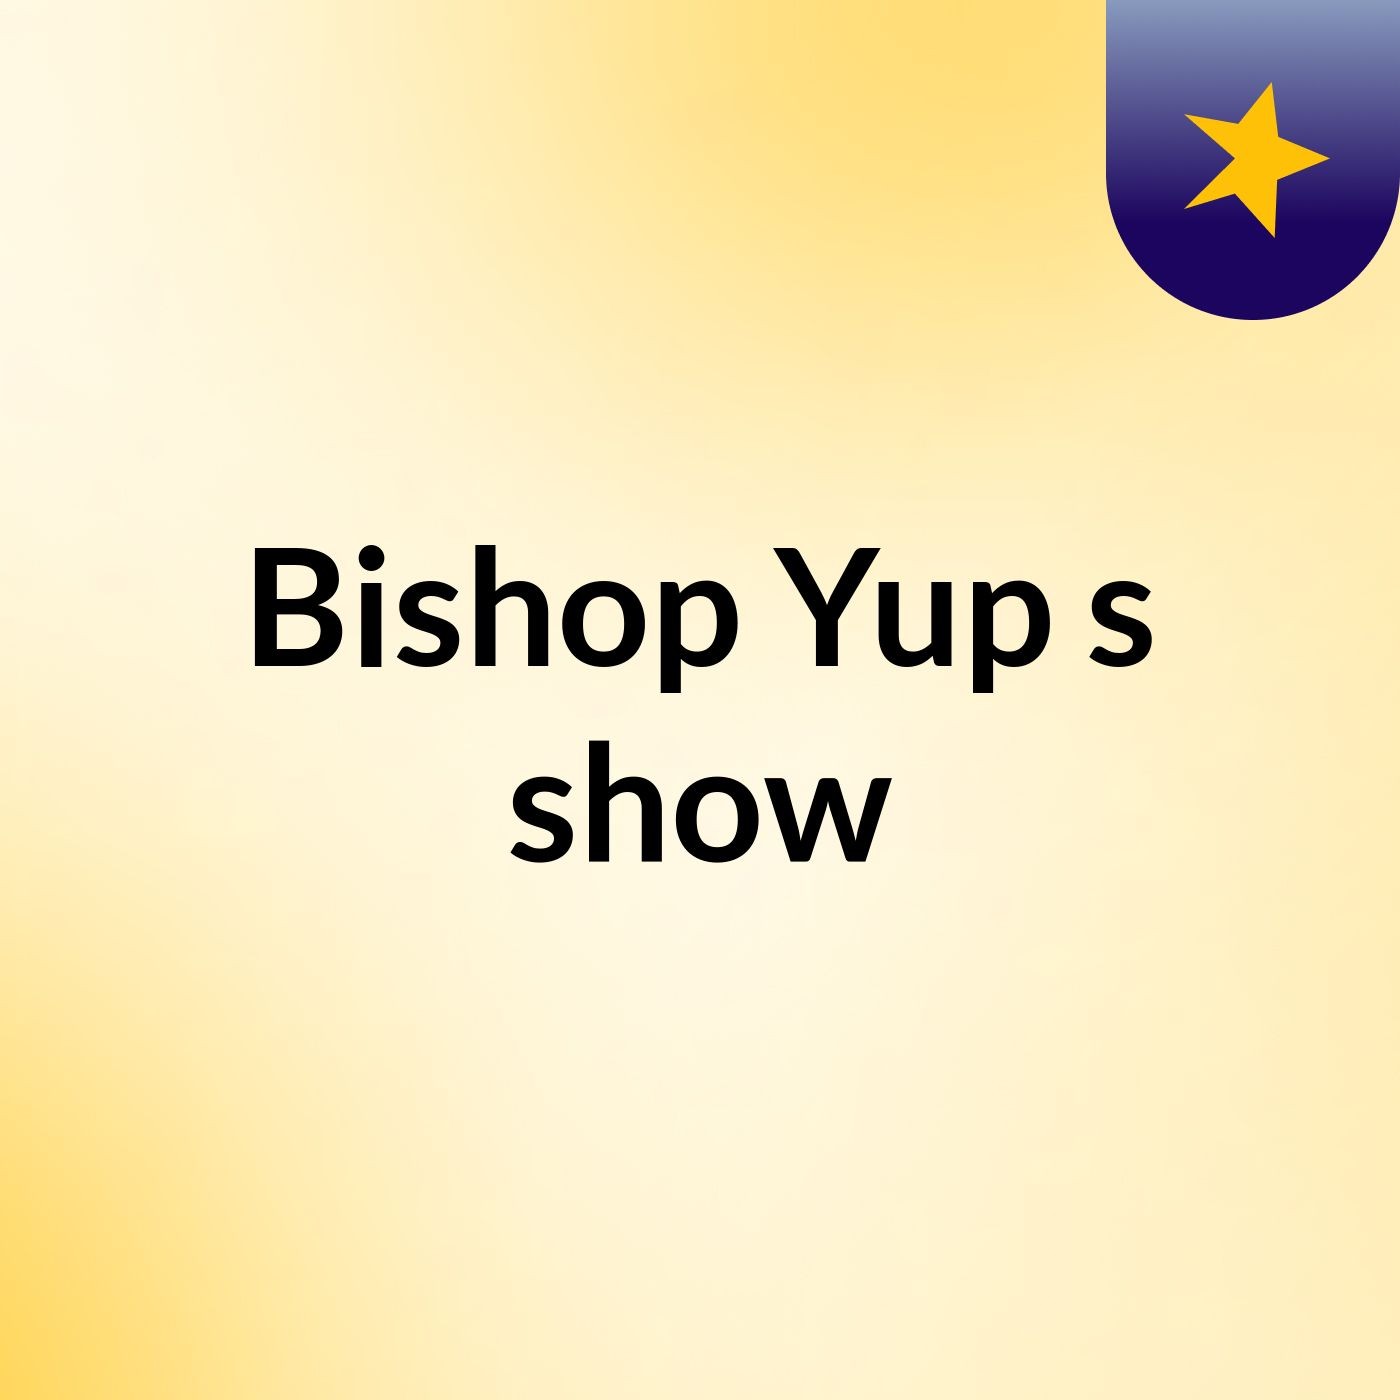 Bishop Yup's show